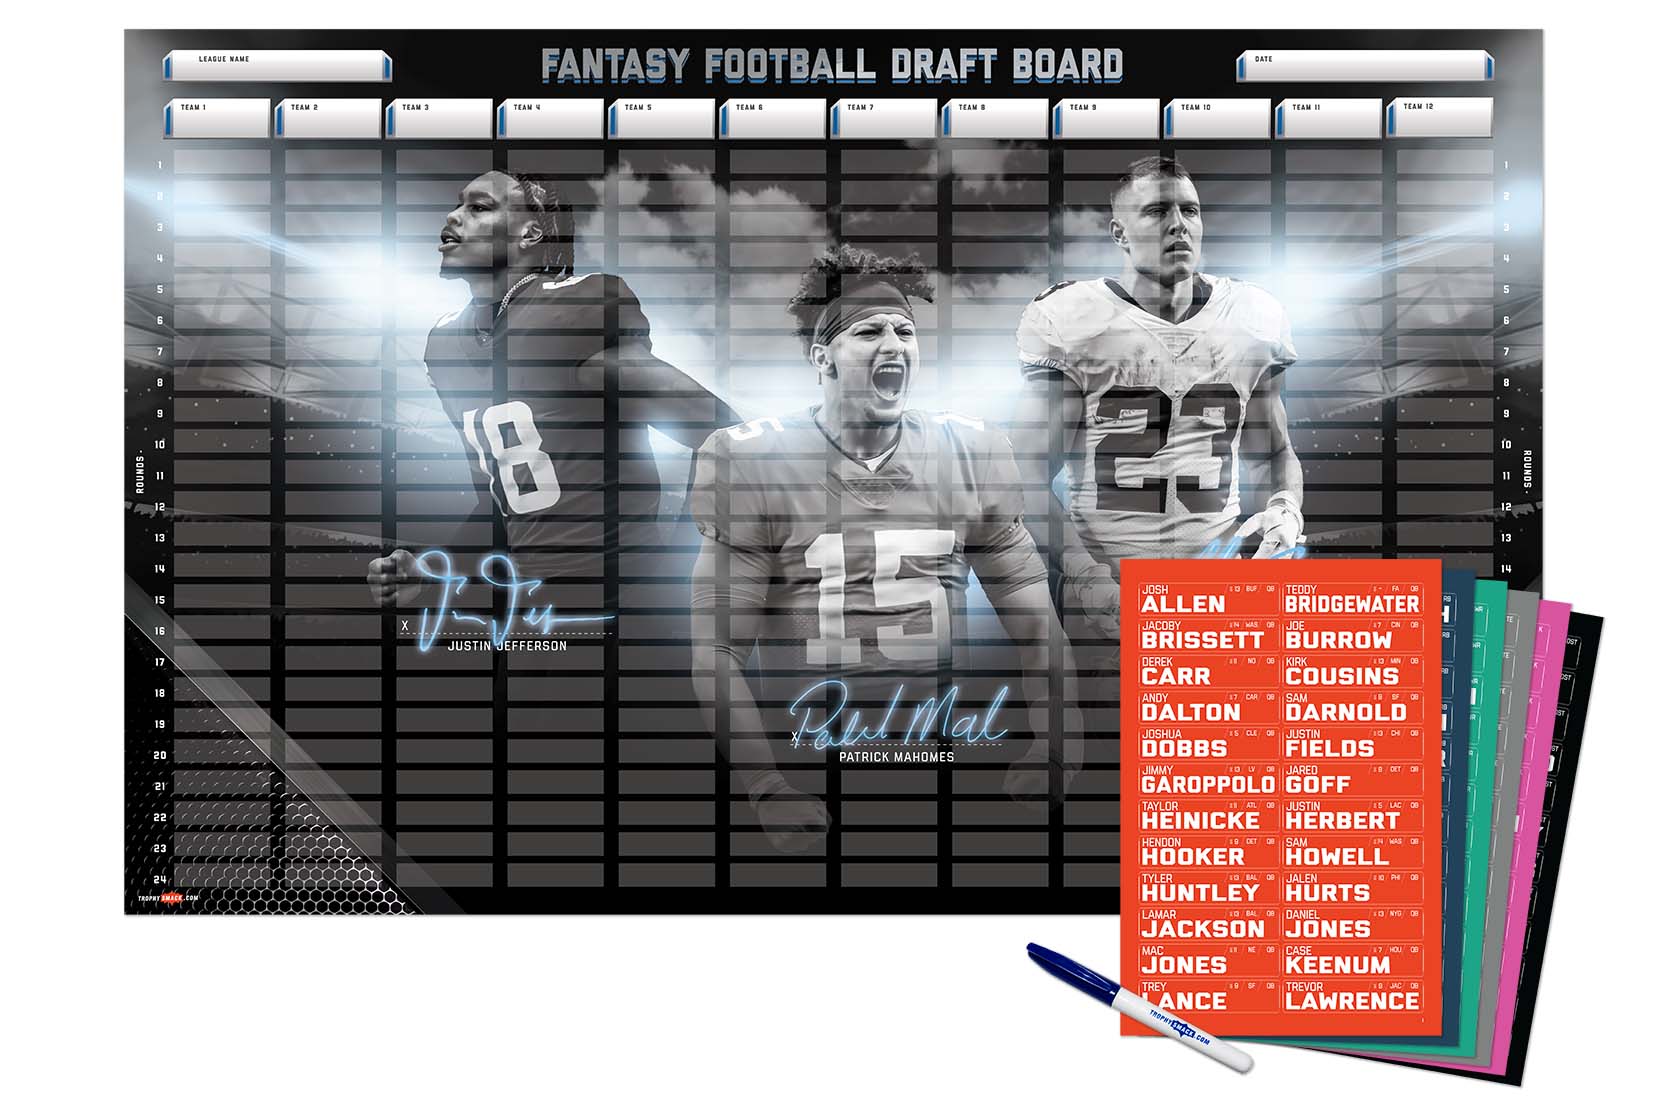 NFL, Fantasy Football, and NFL Draft